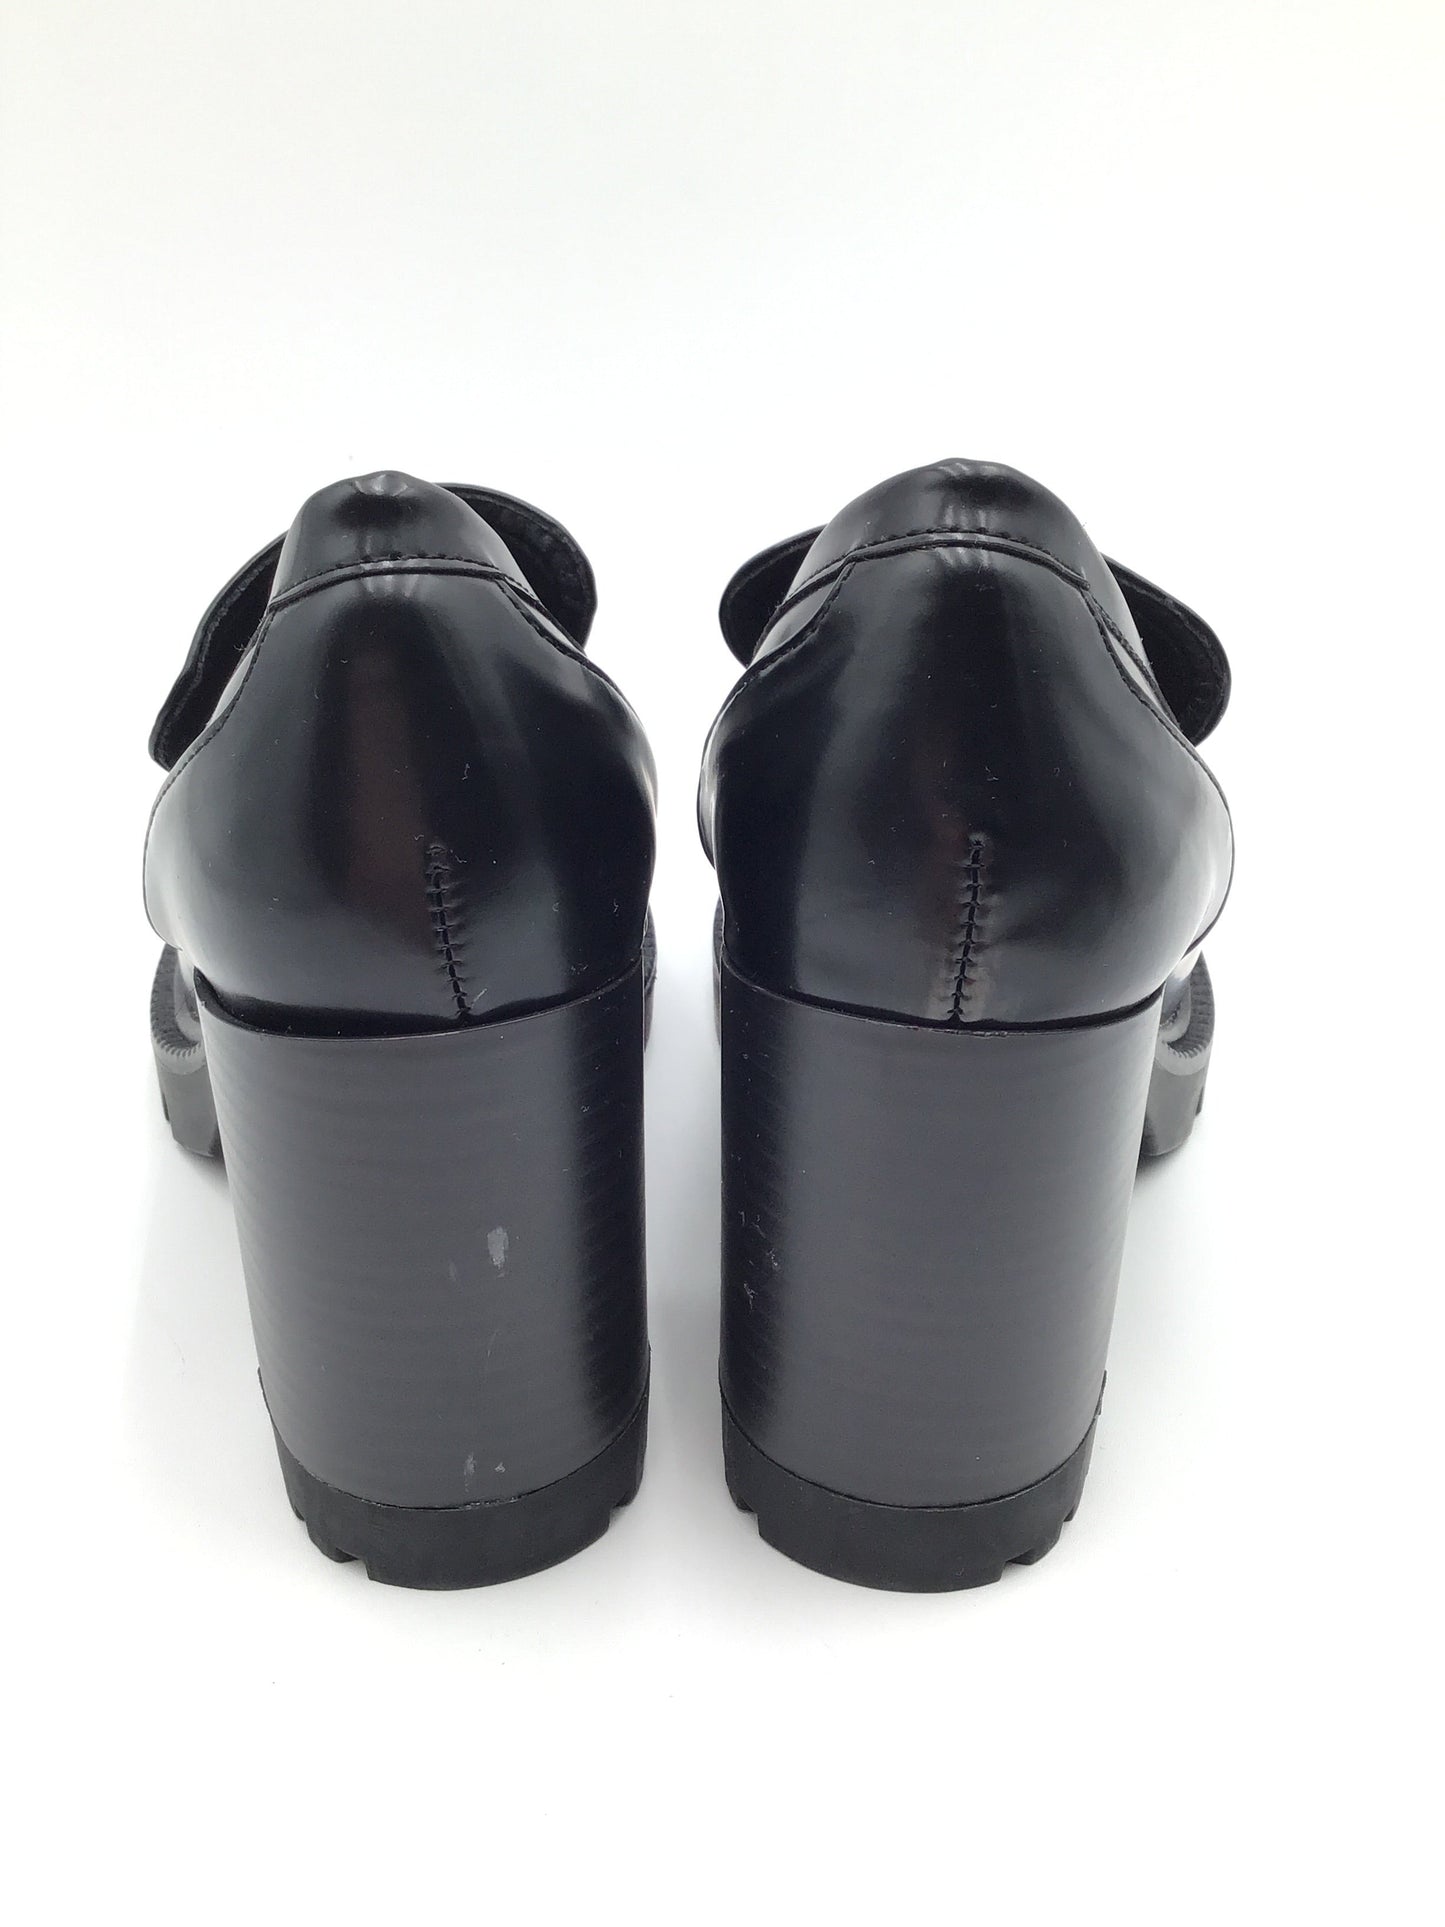 Black Shoes Heels Block Madden Girl, Size 8.5